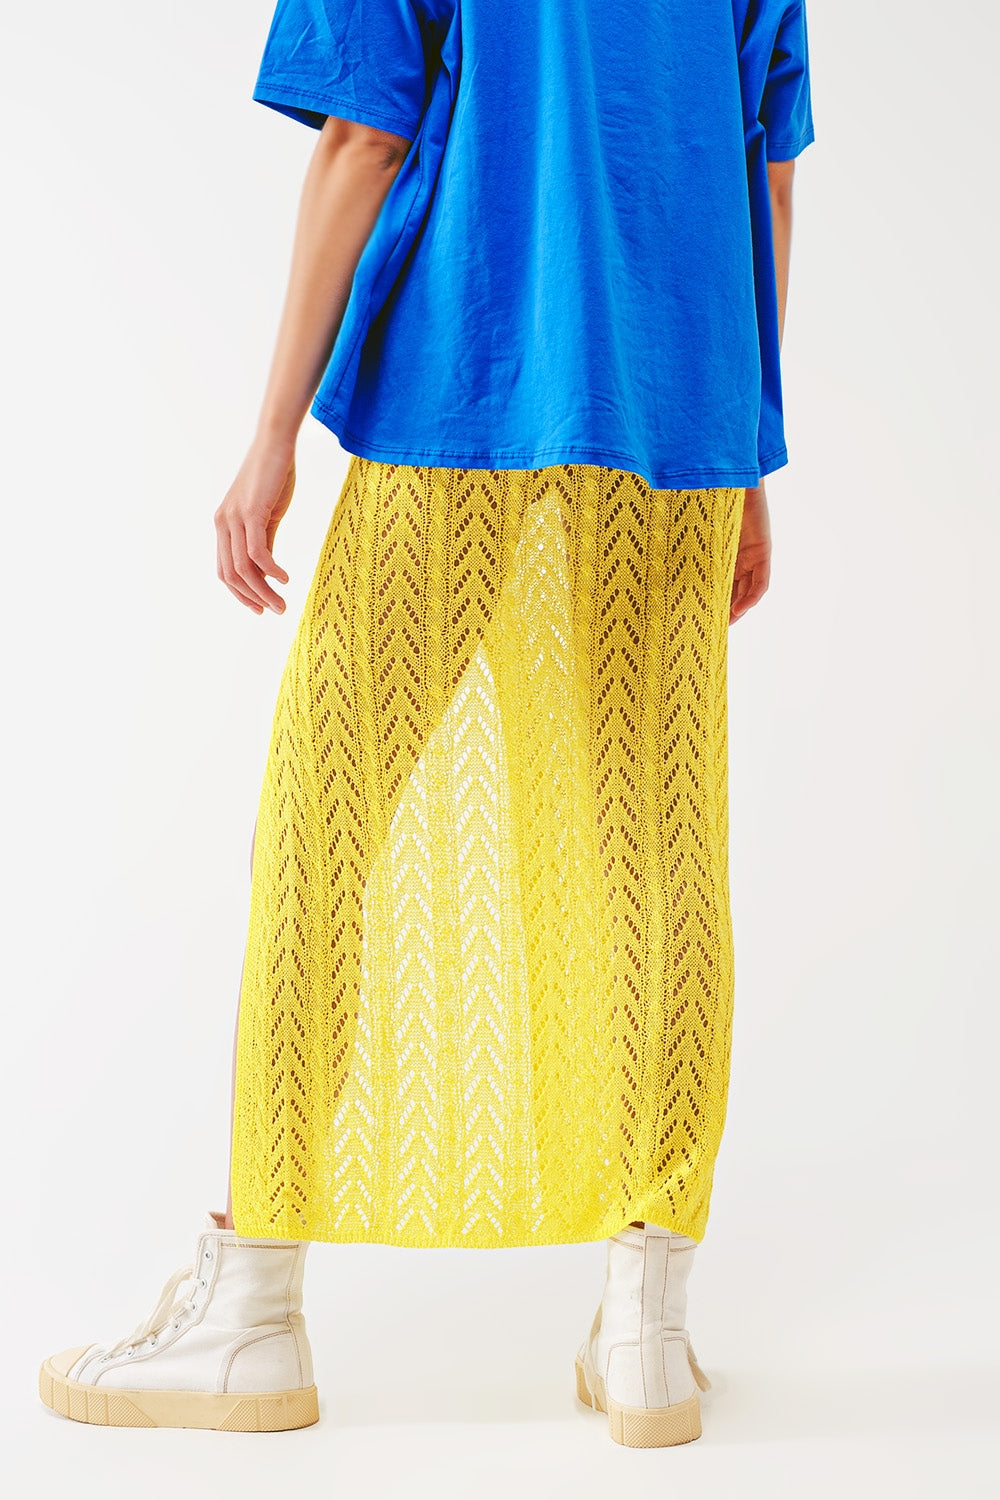 Crochet Maxi Skirt in Yellow - Szua Store